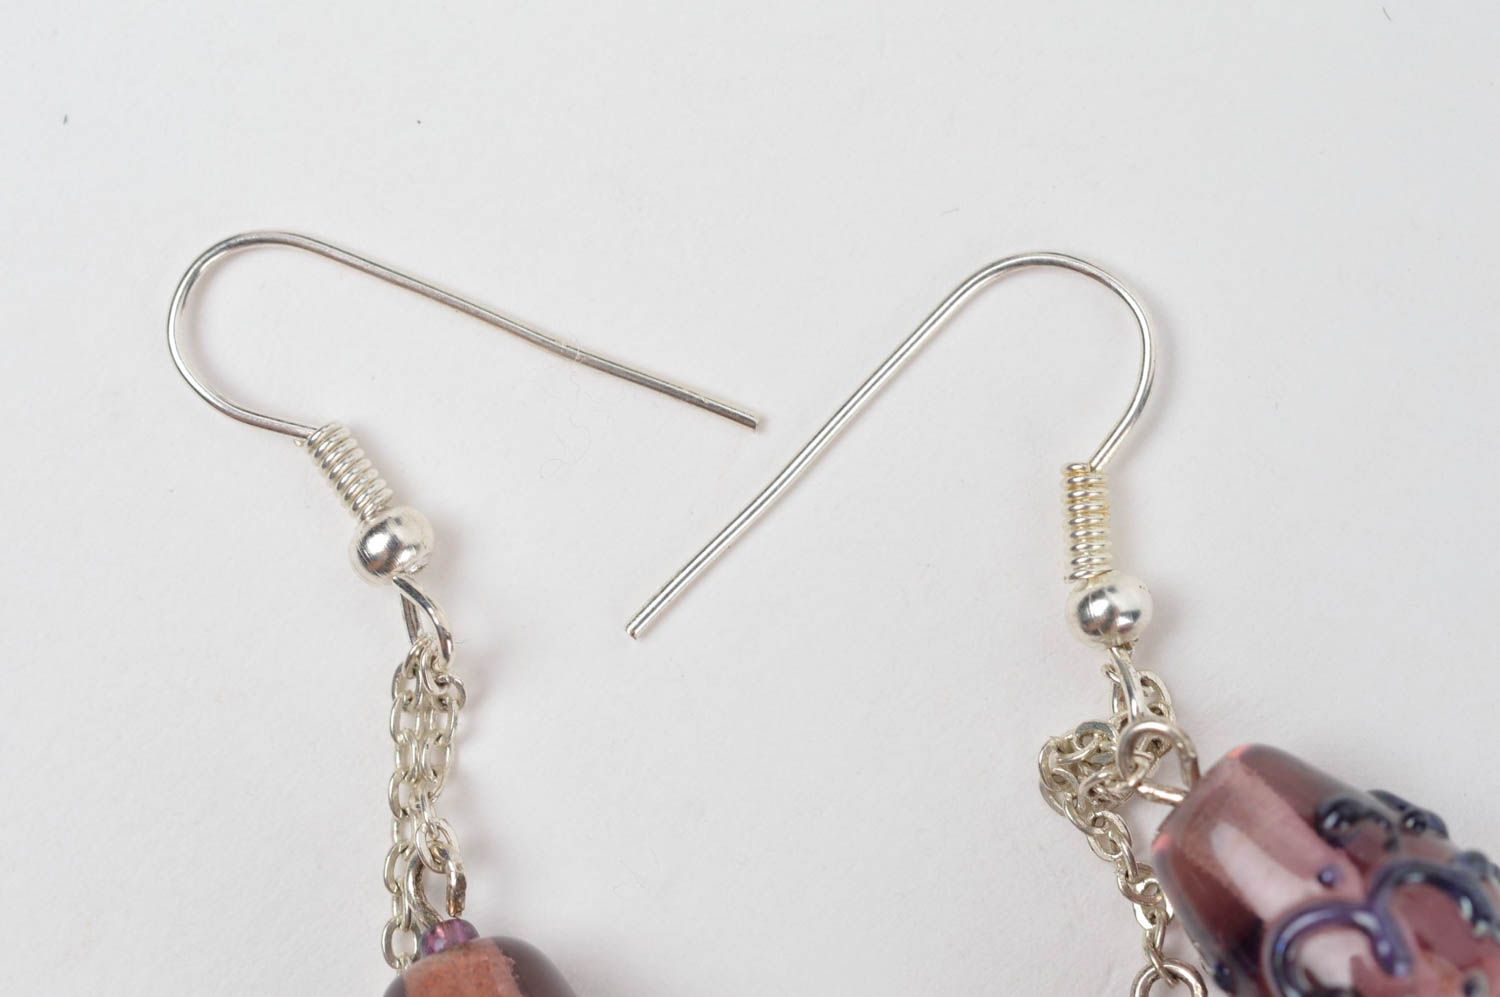 Handmade glass earrings elegant present for women unusual earrings with charms photo 4